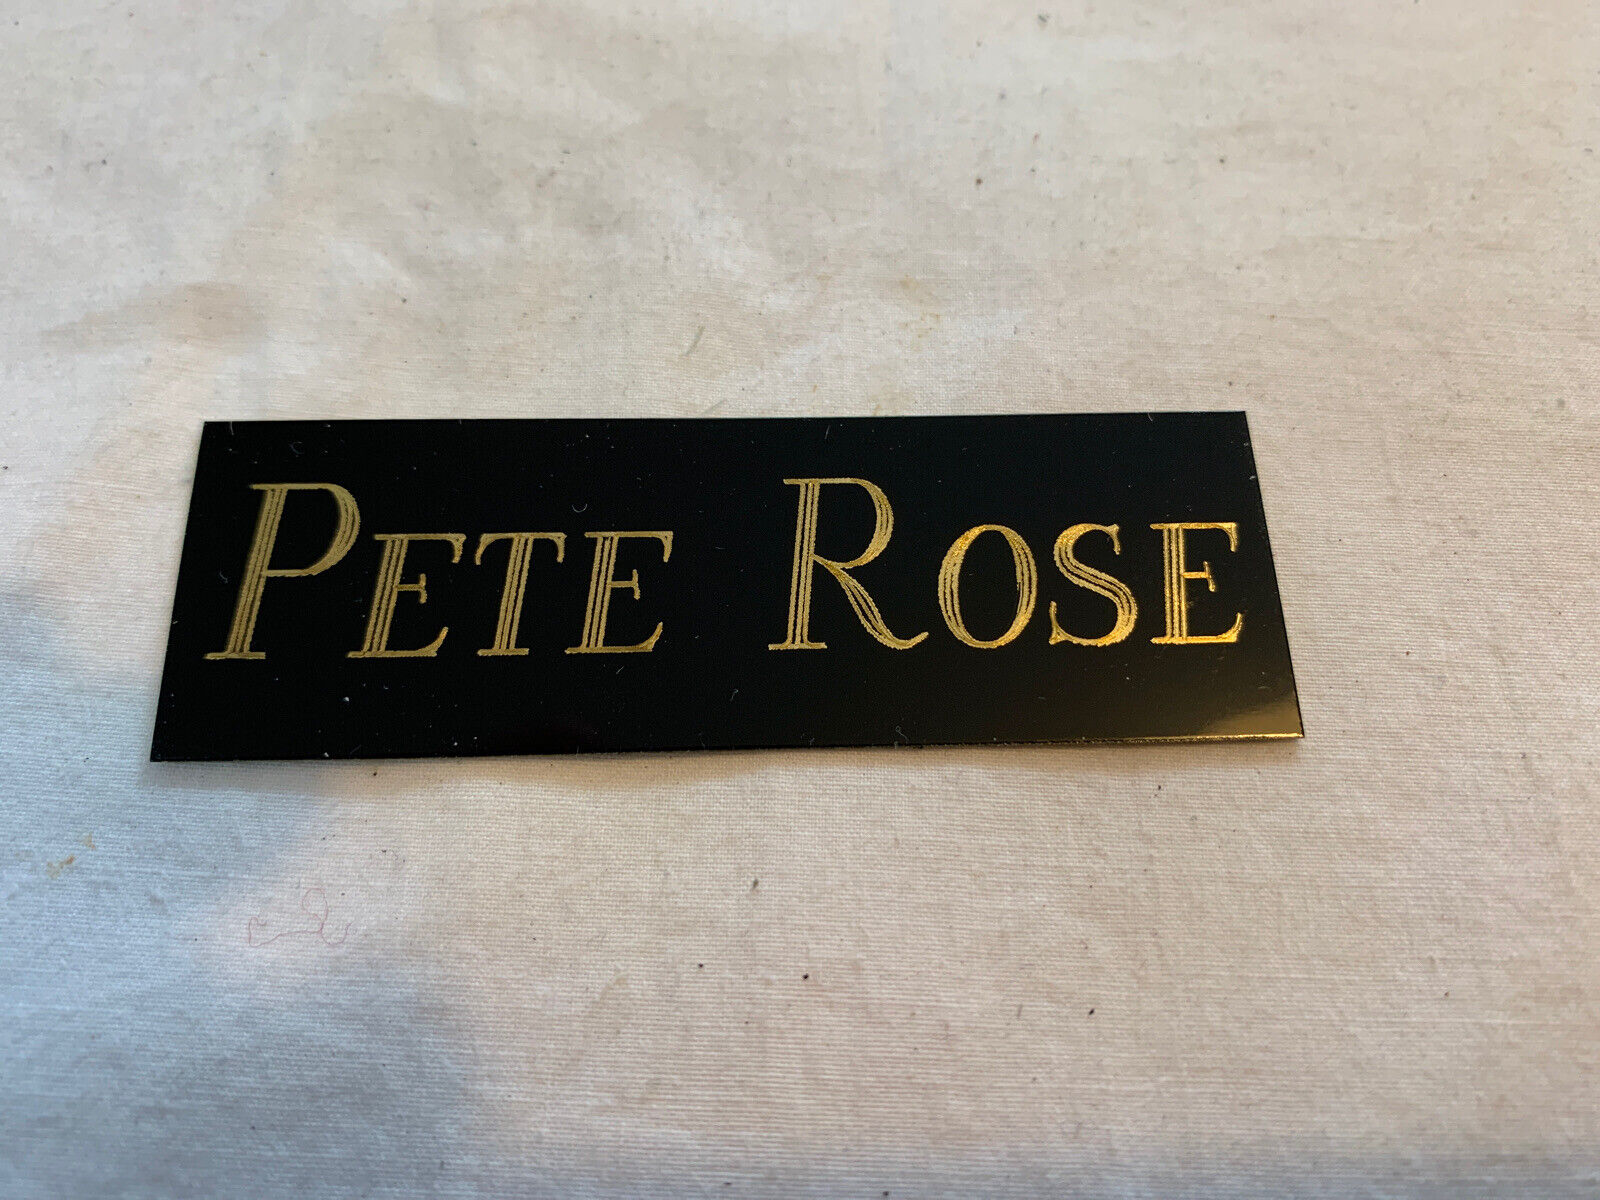 Pete Rose REDS NAMEPLATE AUTOGRAPHED SIGNED BASEBALL BAT JERSEY PHOTO HELMET